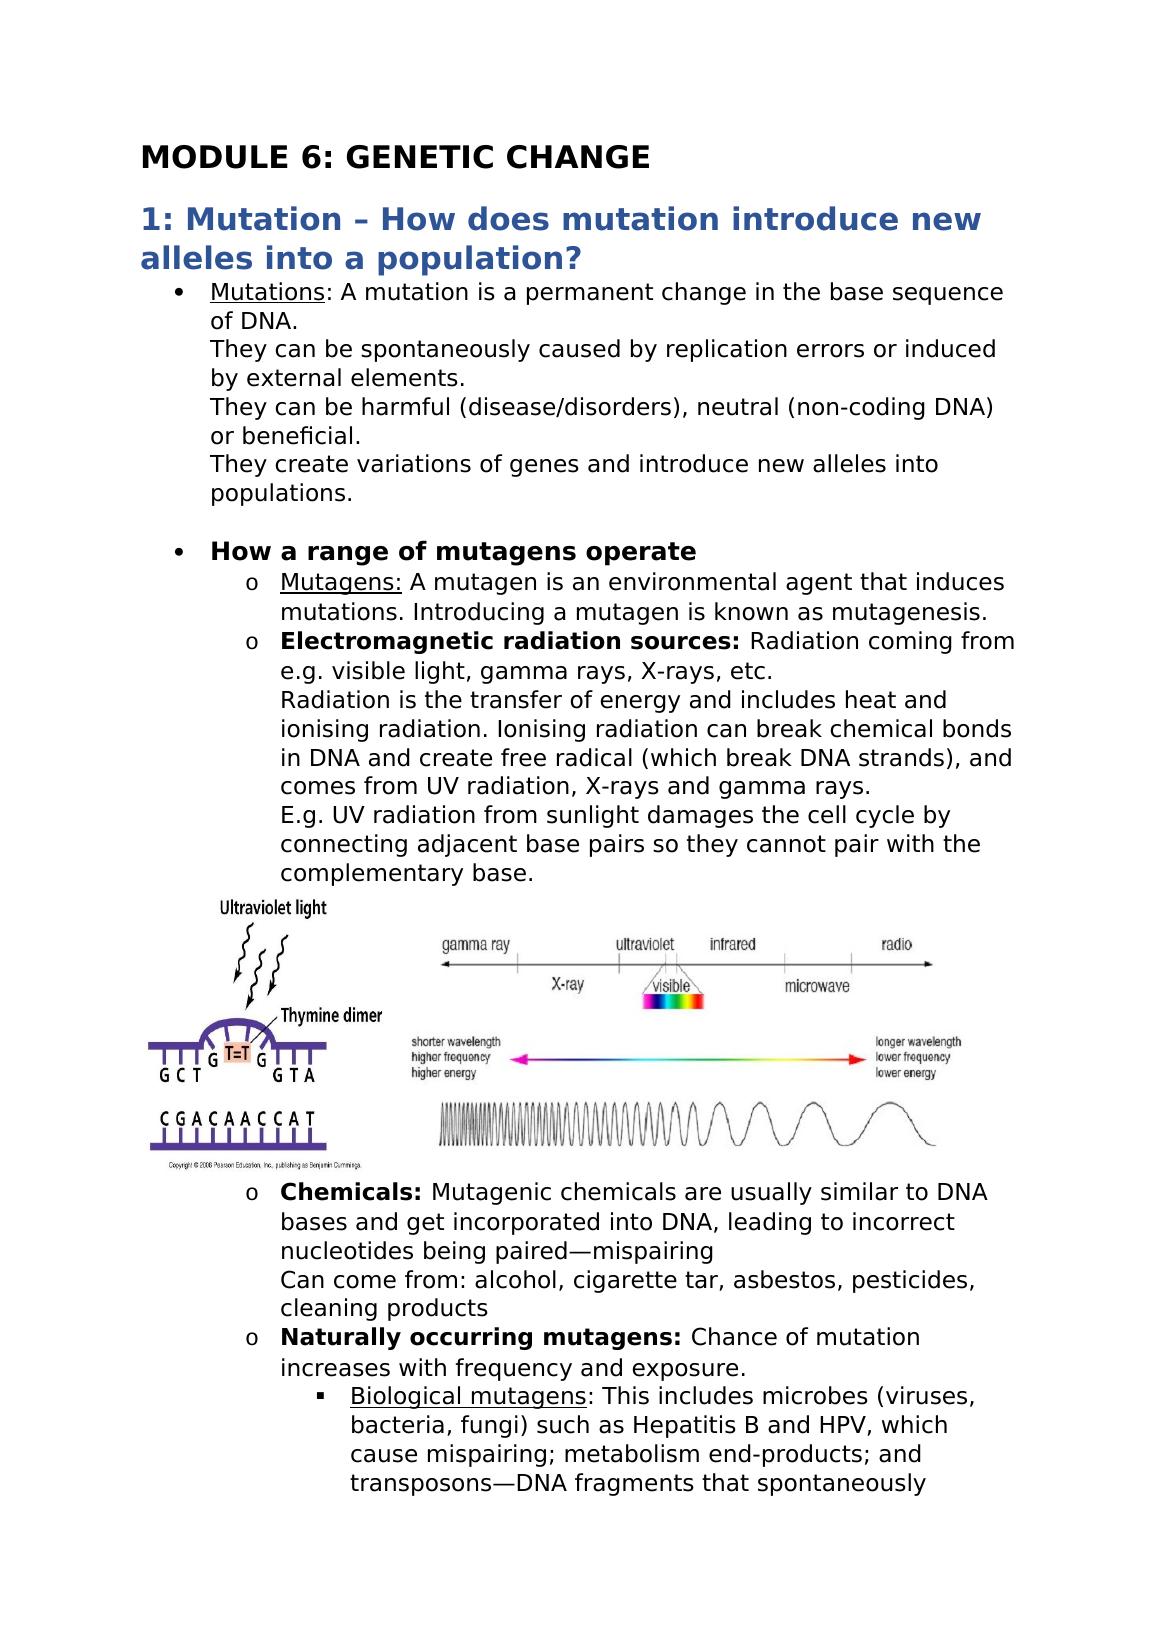 Genetic Change: Mutation and Biotechnology_1